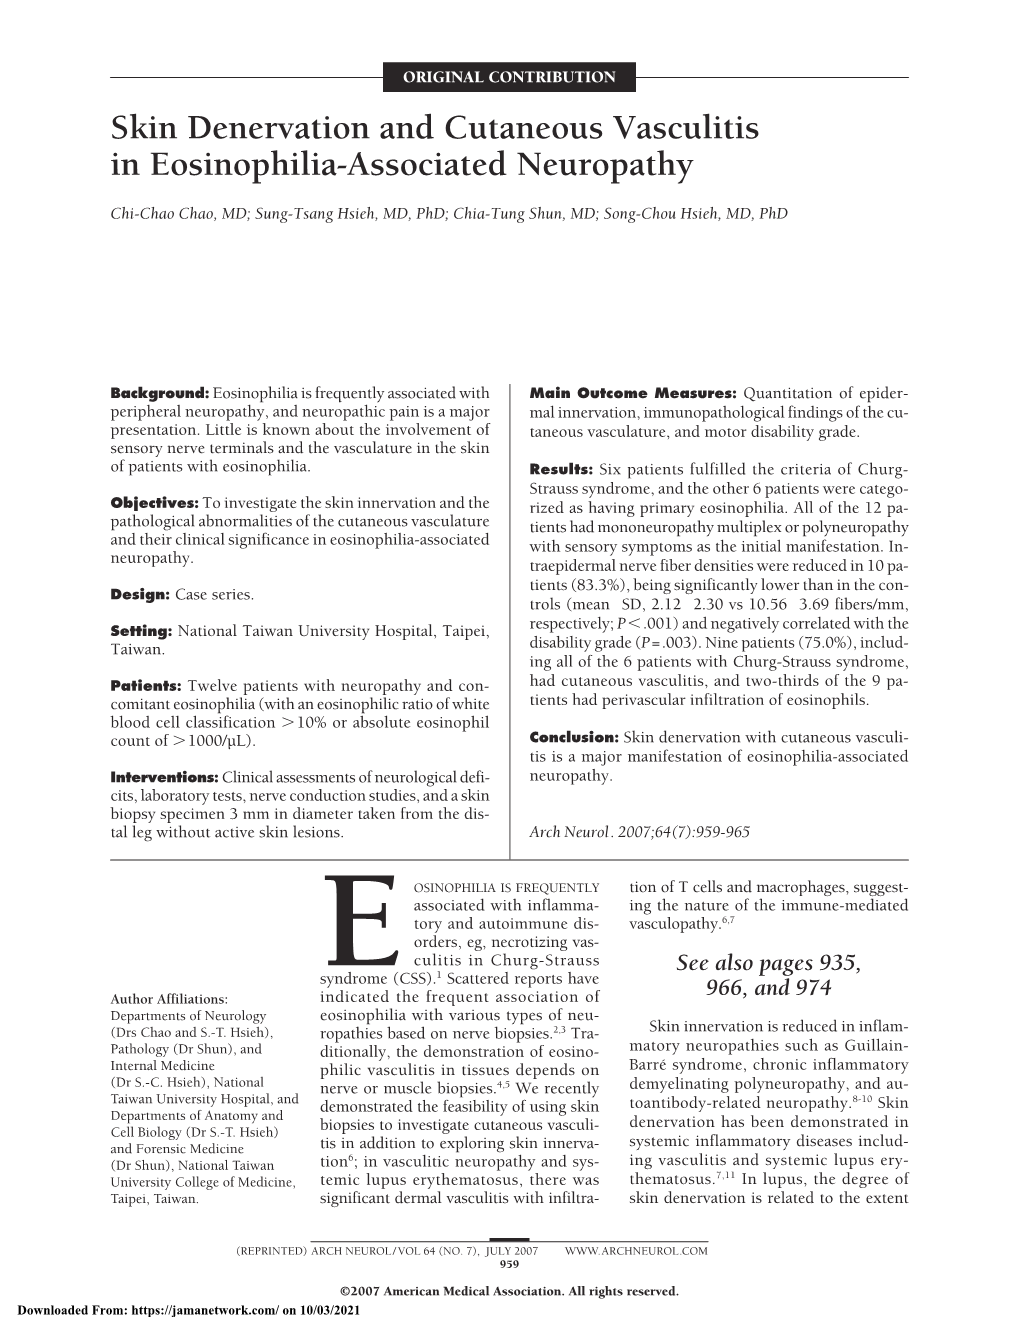 Skin Denervation and Cutaneous Vasculitis in Eosinophilia-Associated Neuropathy